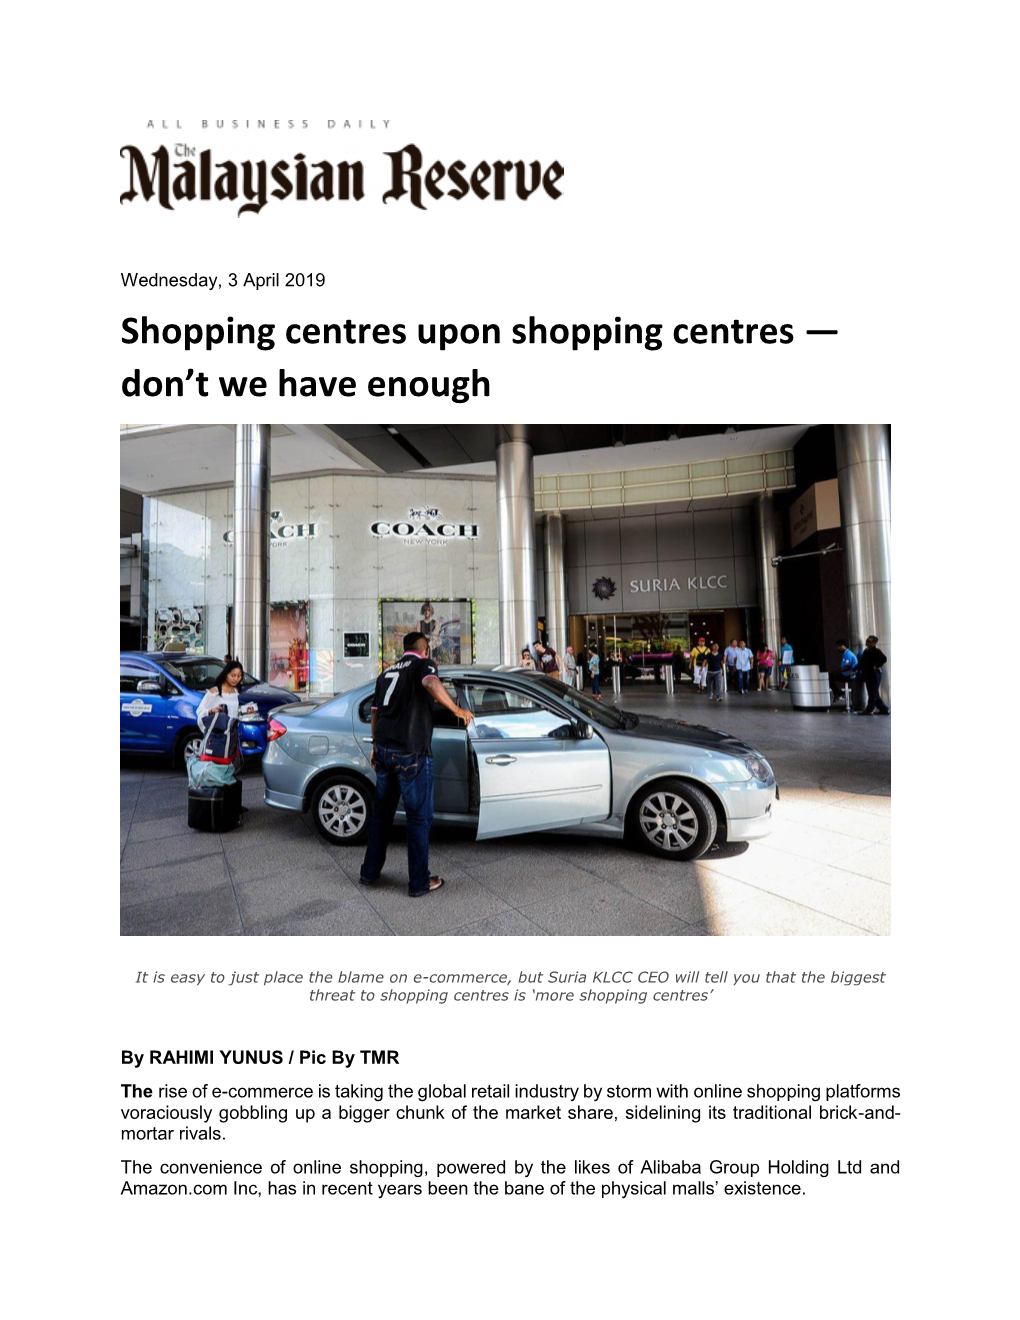 Shopping Centres Upon Shopping Centres — Don't We Have Enough